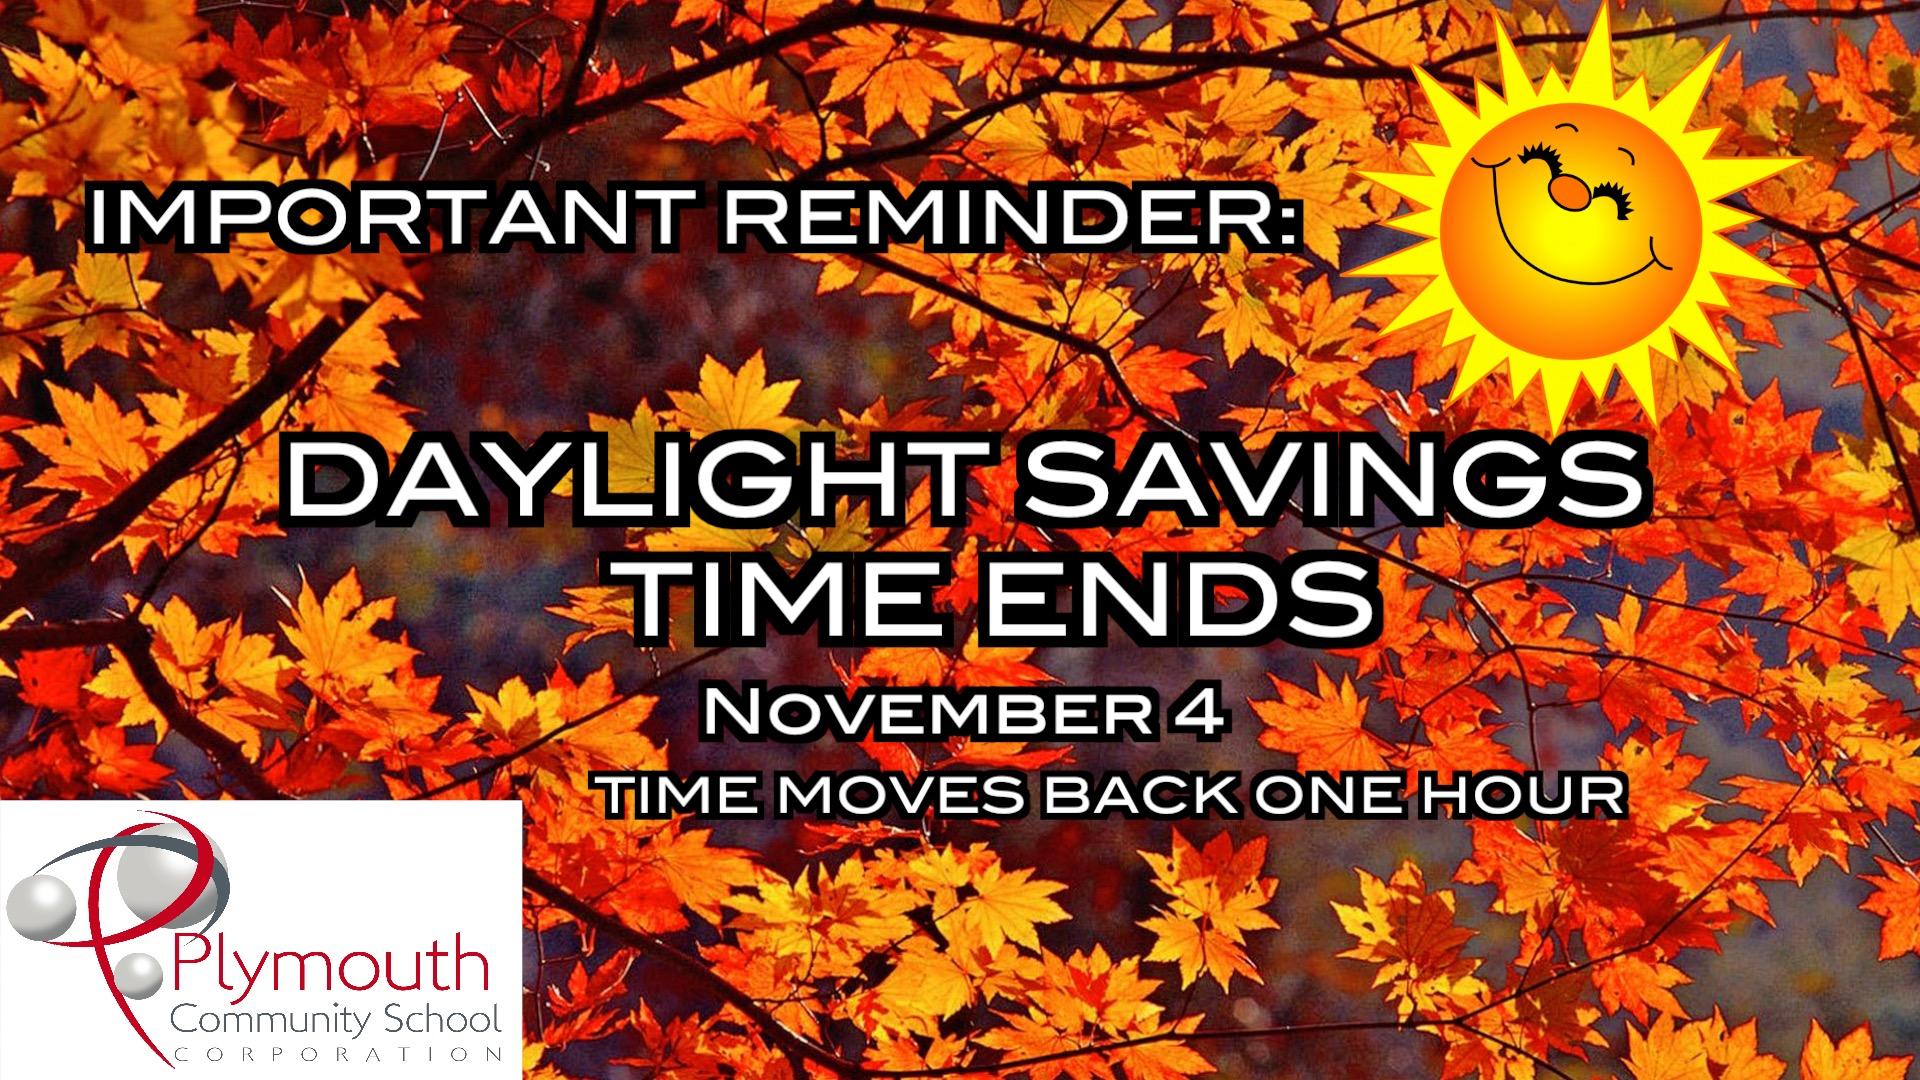 Important Reminder Daylight Savings Time ends Sunday, November 4 Time moves back one hour.... leaf image background and PCSC logo